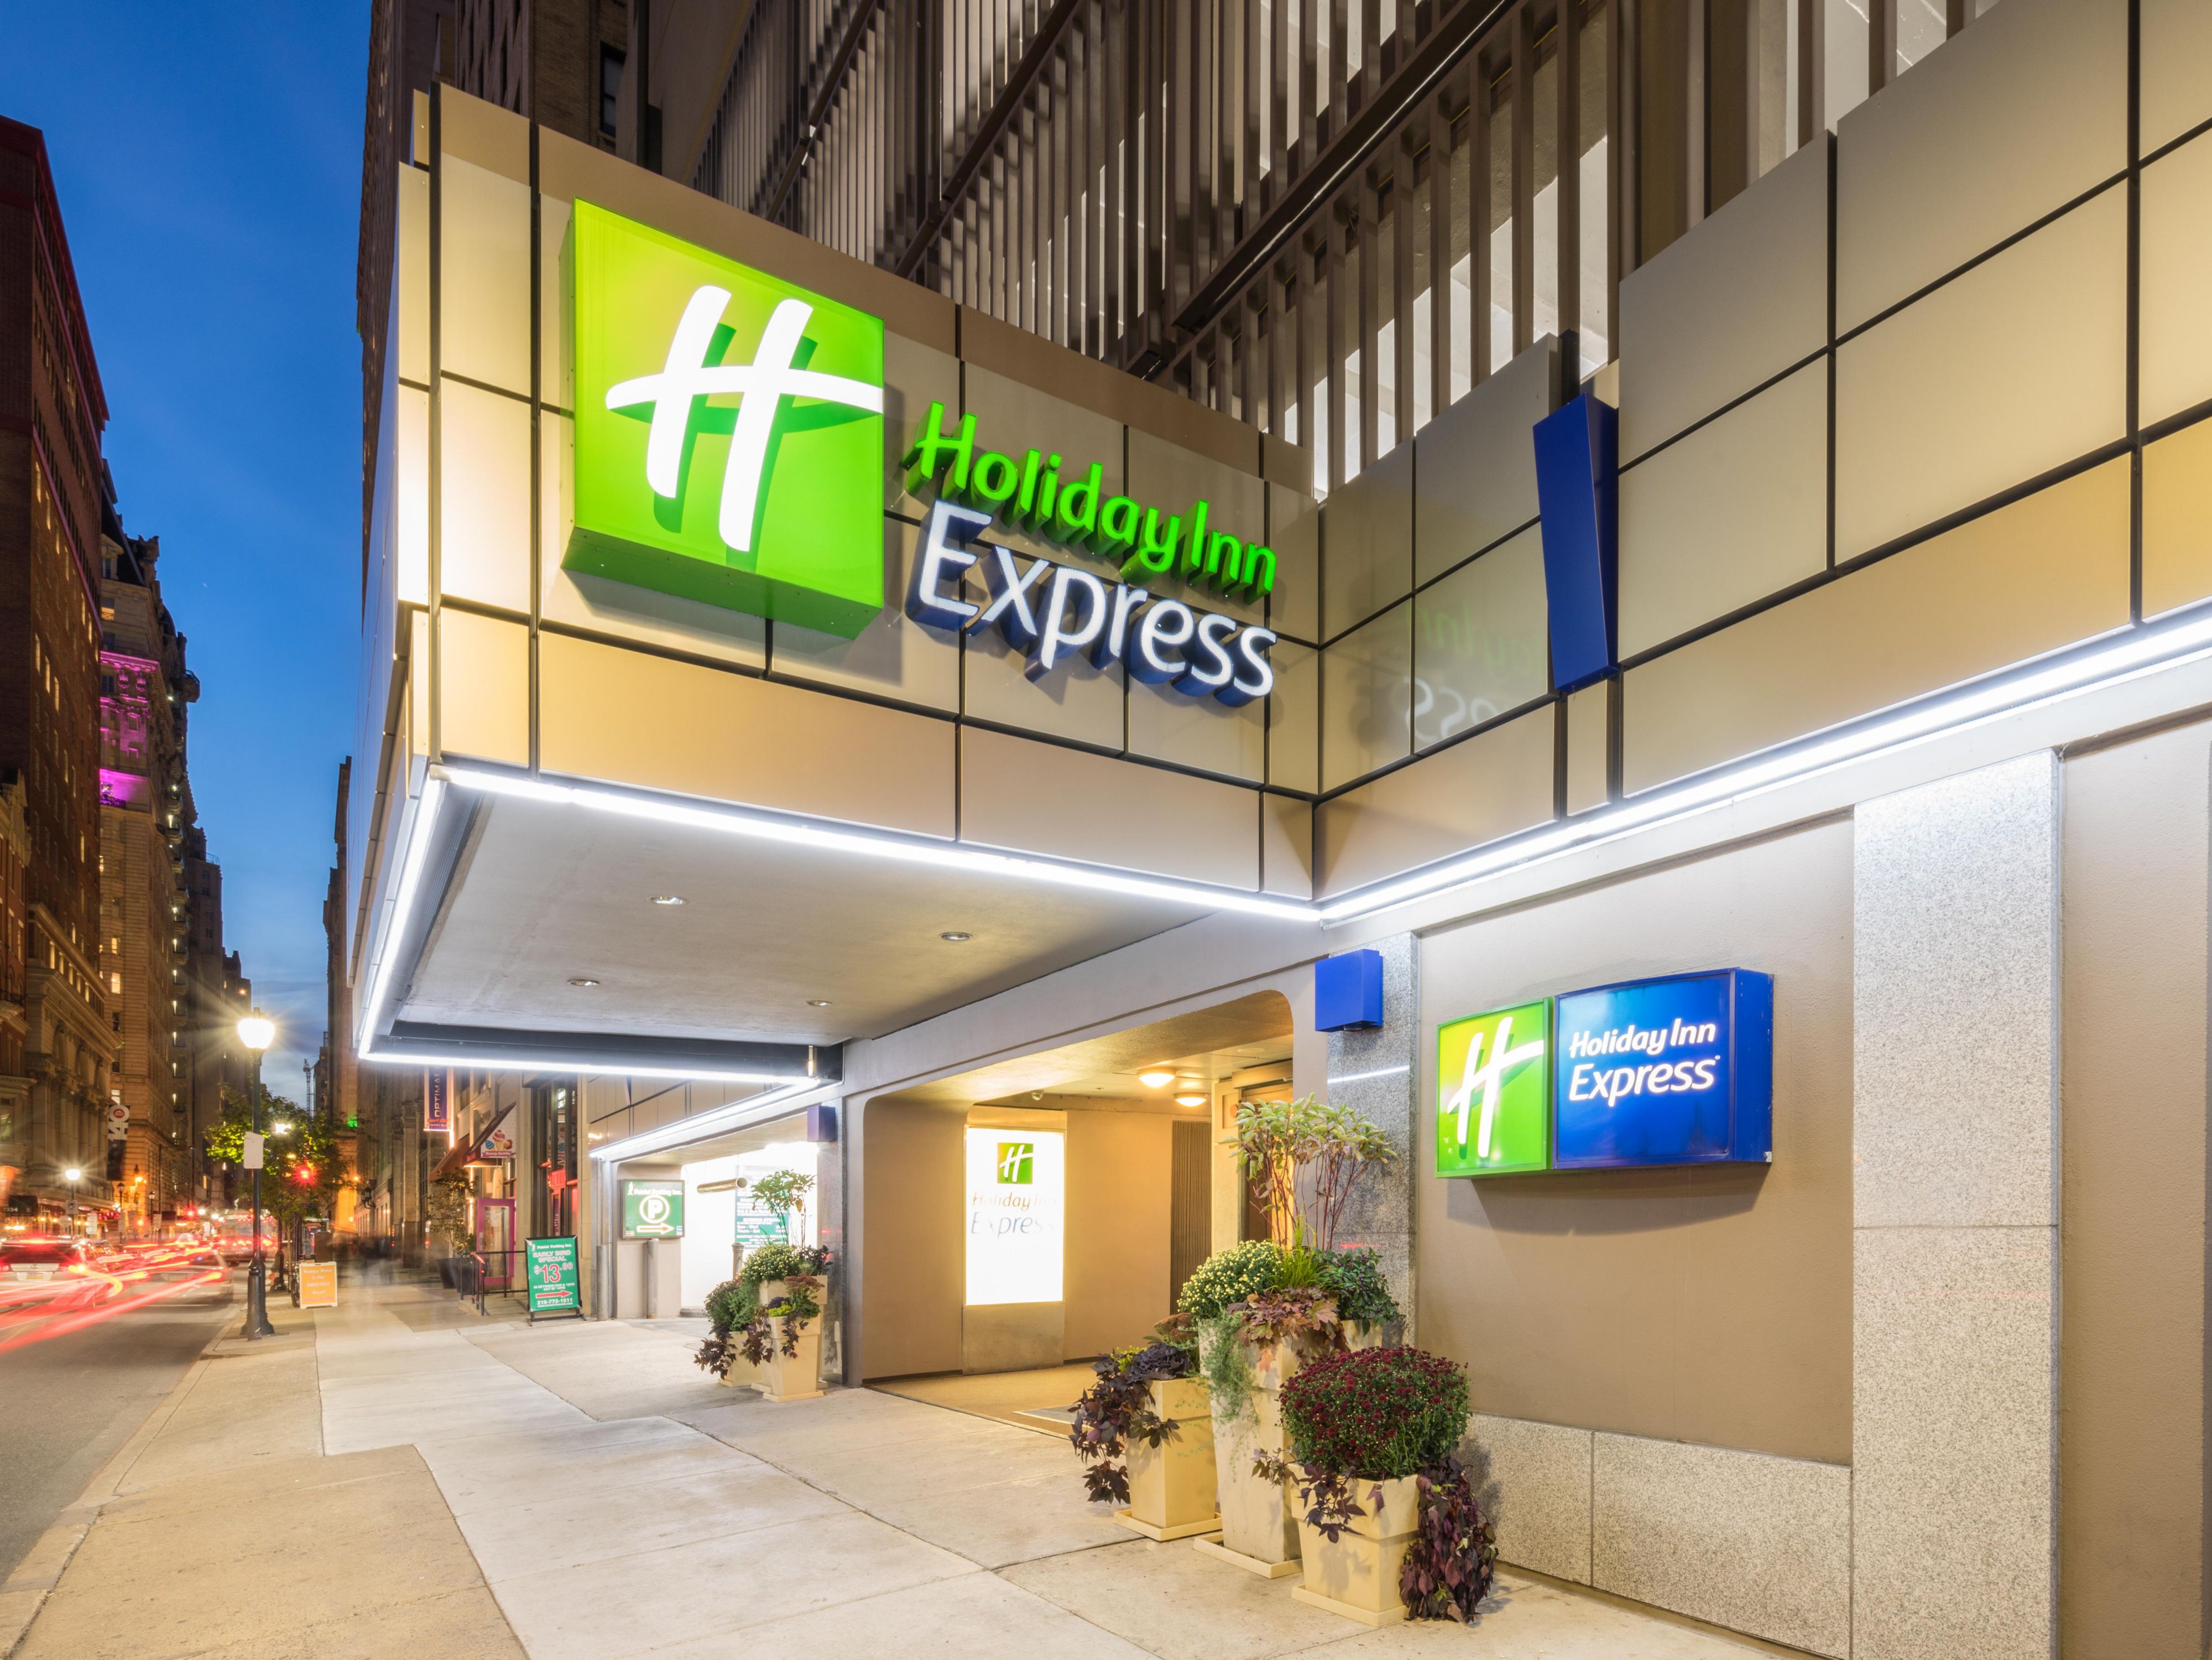 Holiday Inn Express Philadelphia 4795987093 4x3